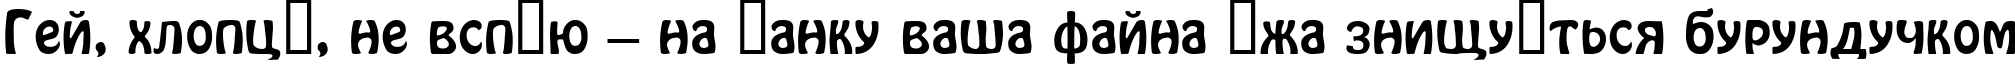 Пример написания шрифтом Hover текста на украинском